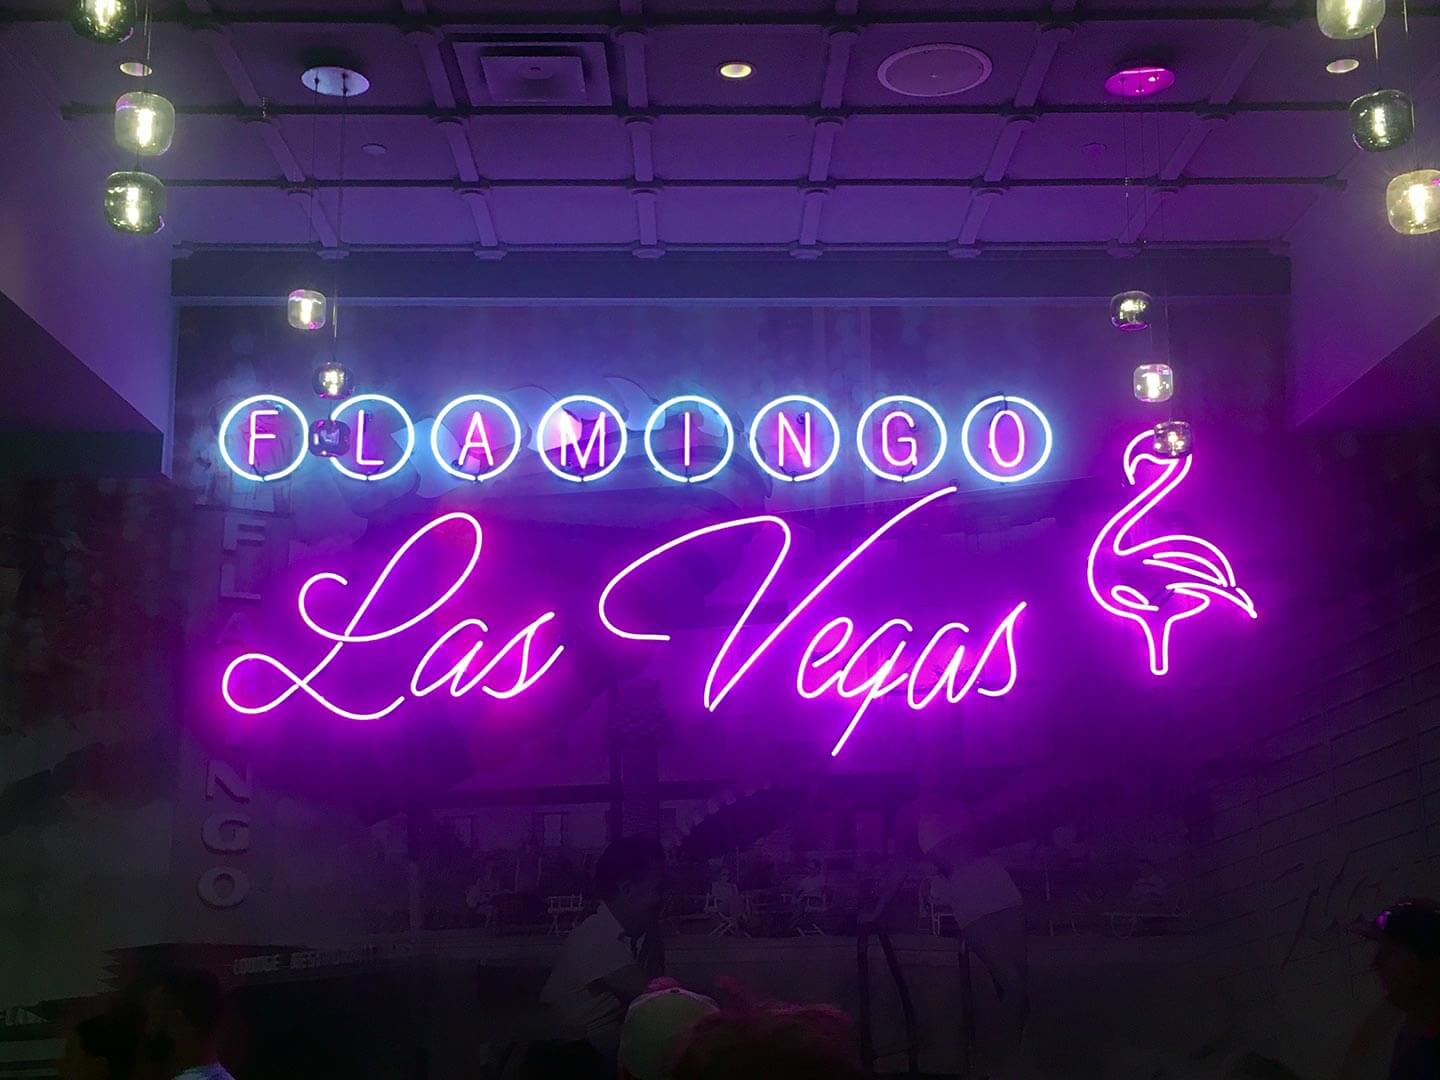 Flamingo Las Vegas Neon Sign